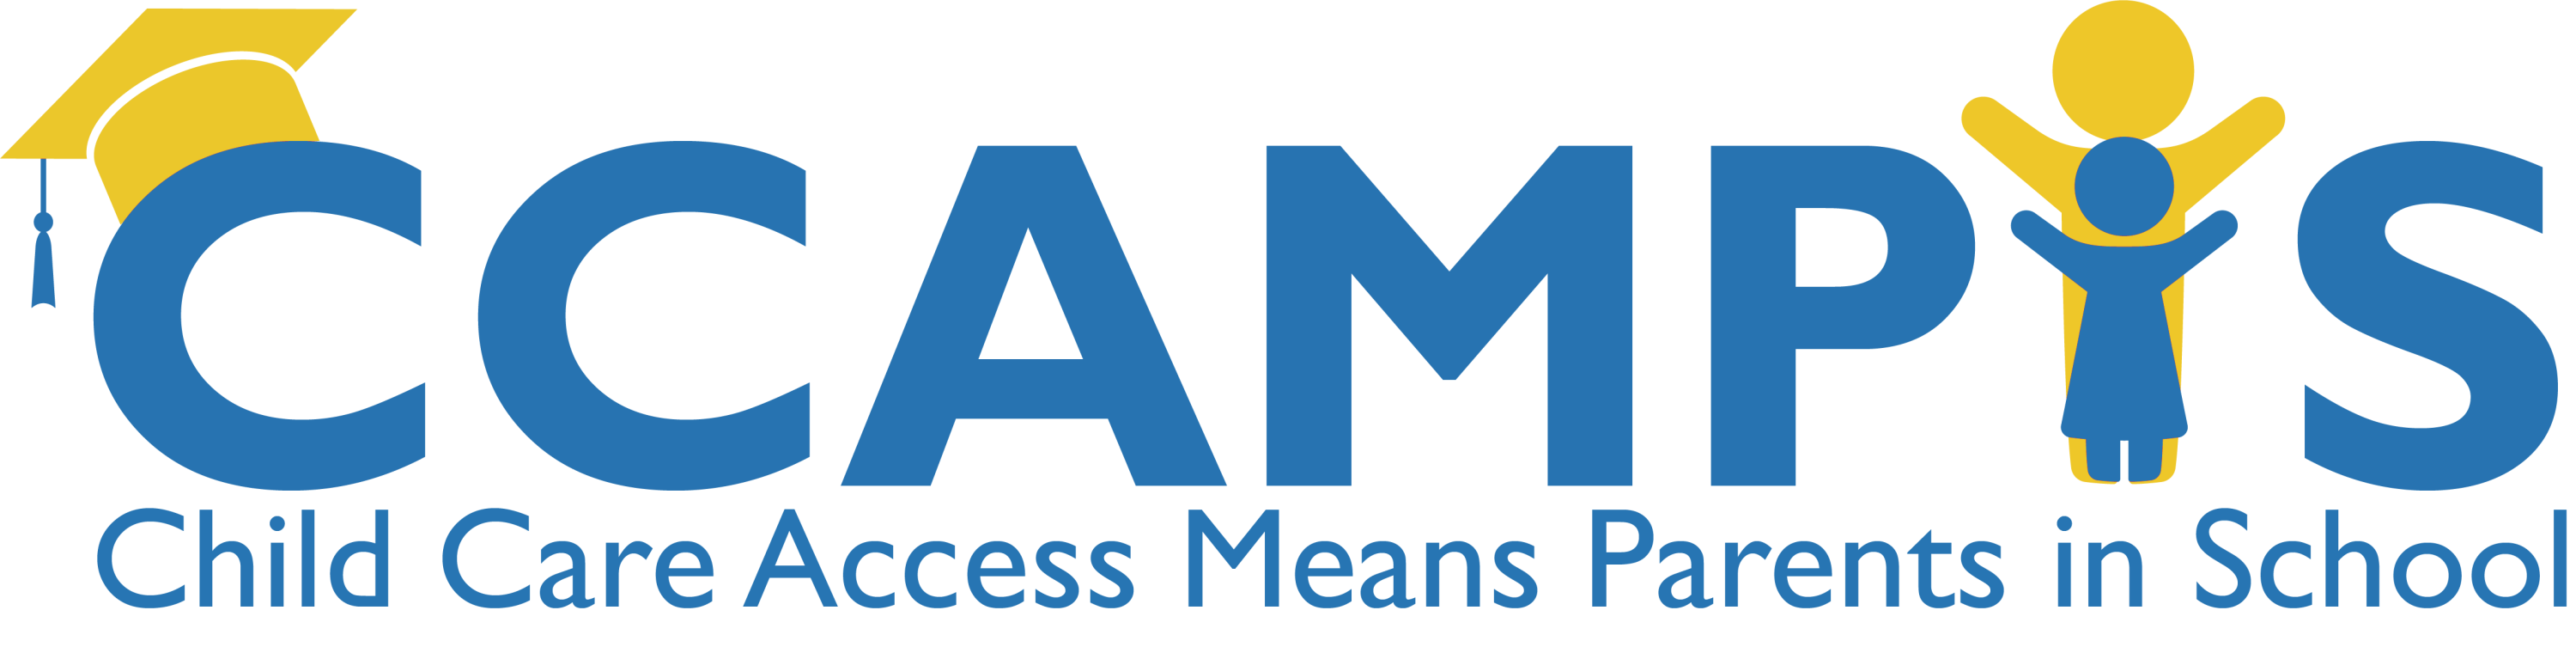 CCAMPIS Logo